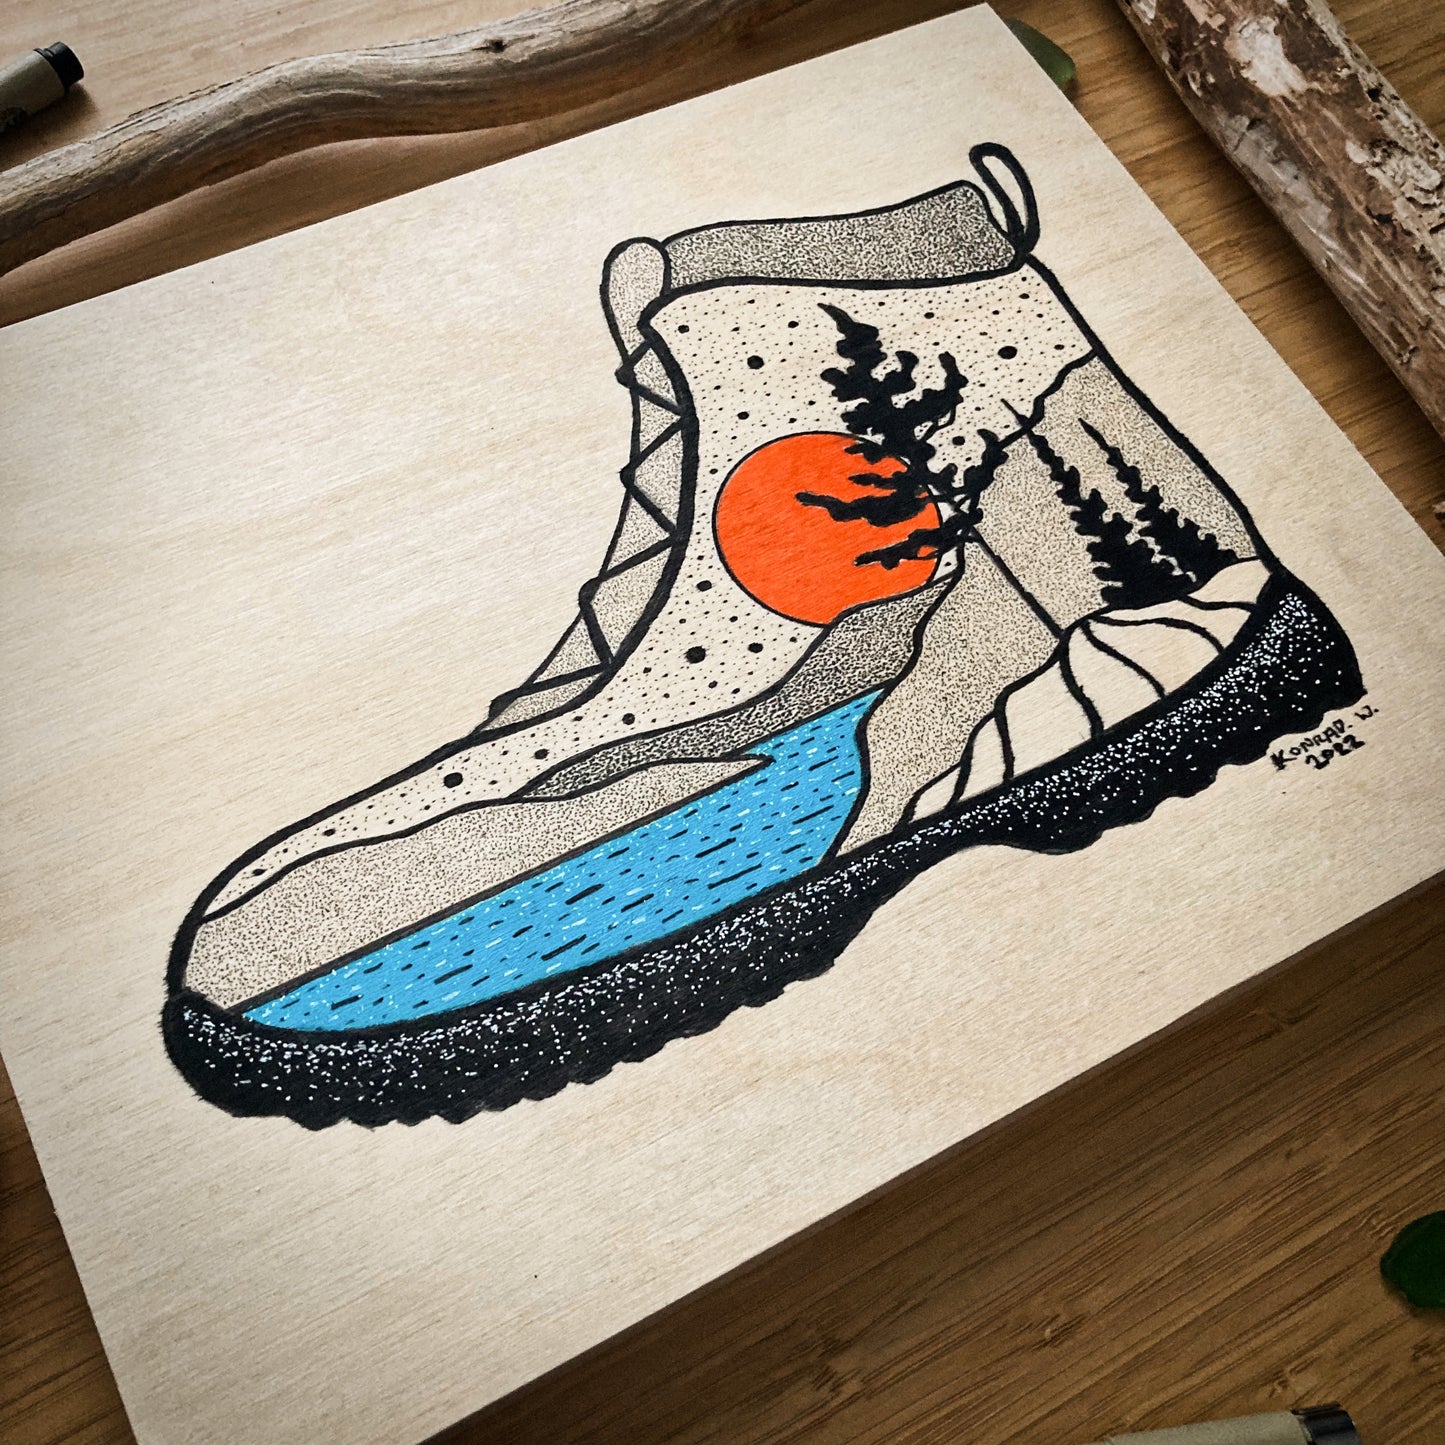 Hiking Boot - ORIGINAL 8x10 Wood Panel Illustration